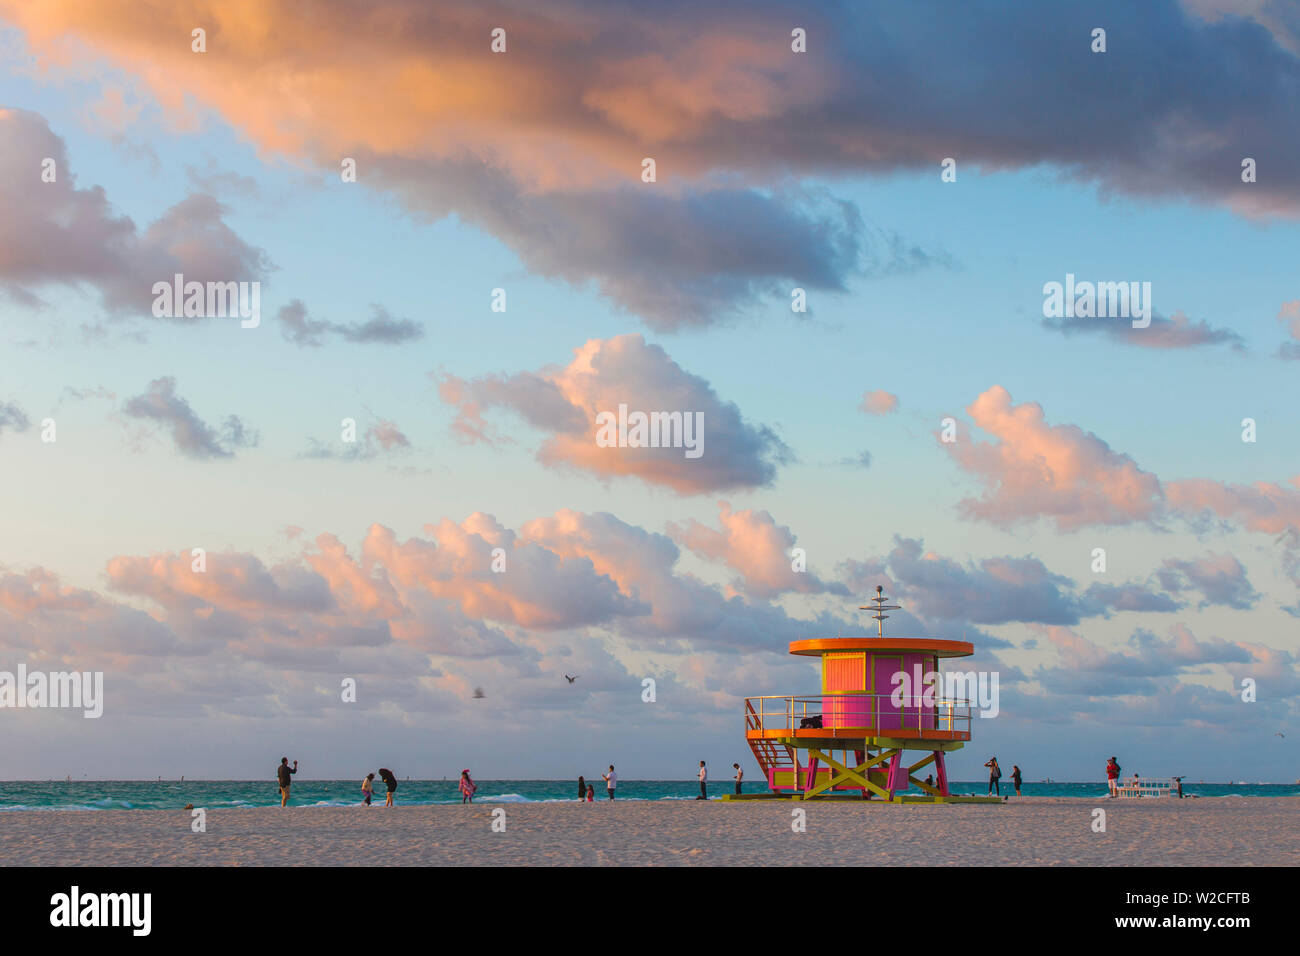 Usa, Miami, Miami Beach, South Beach, Life guard Beach Hut Stockfoto